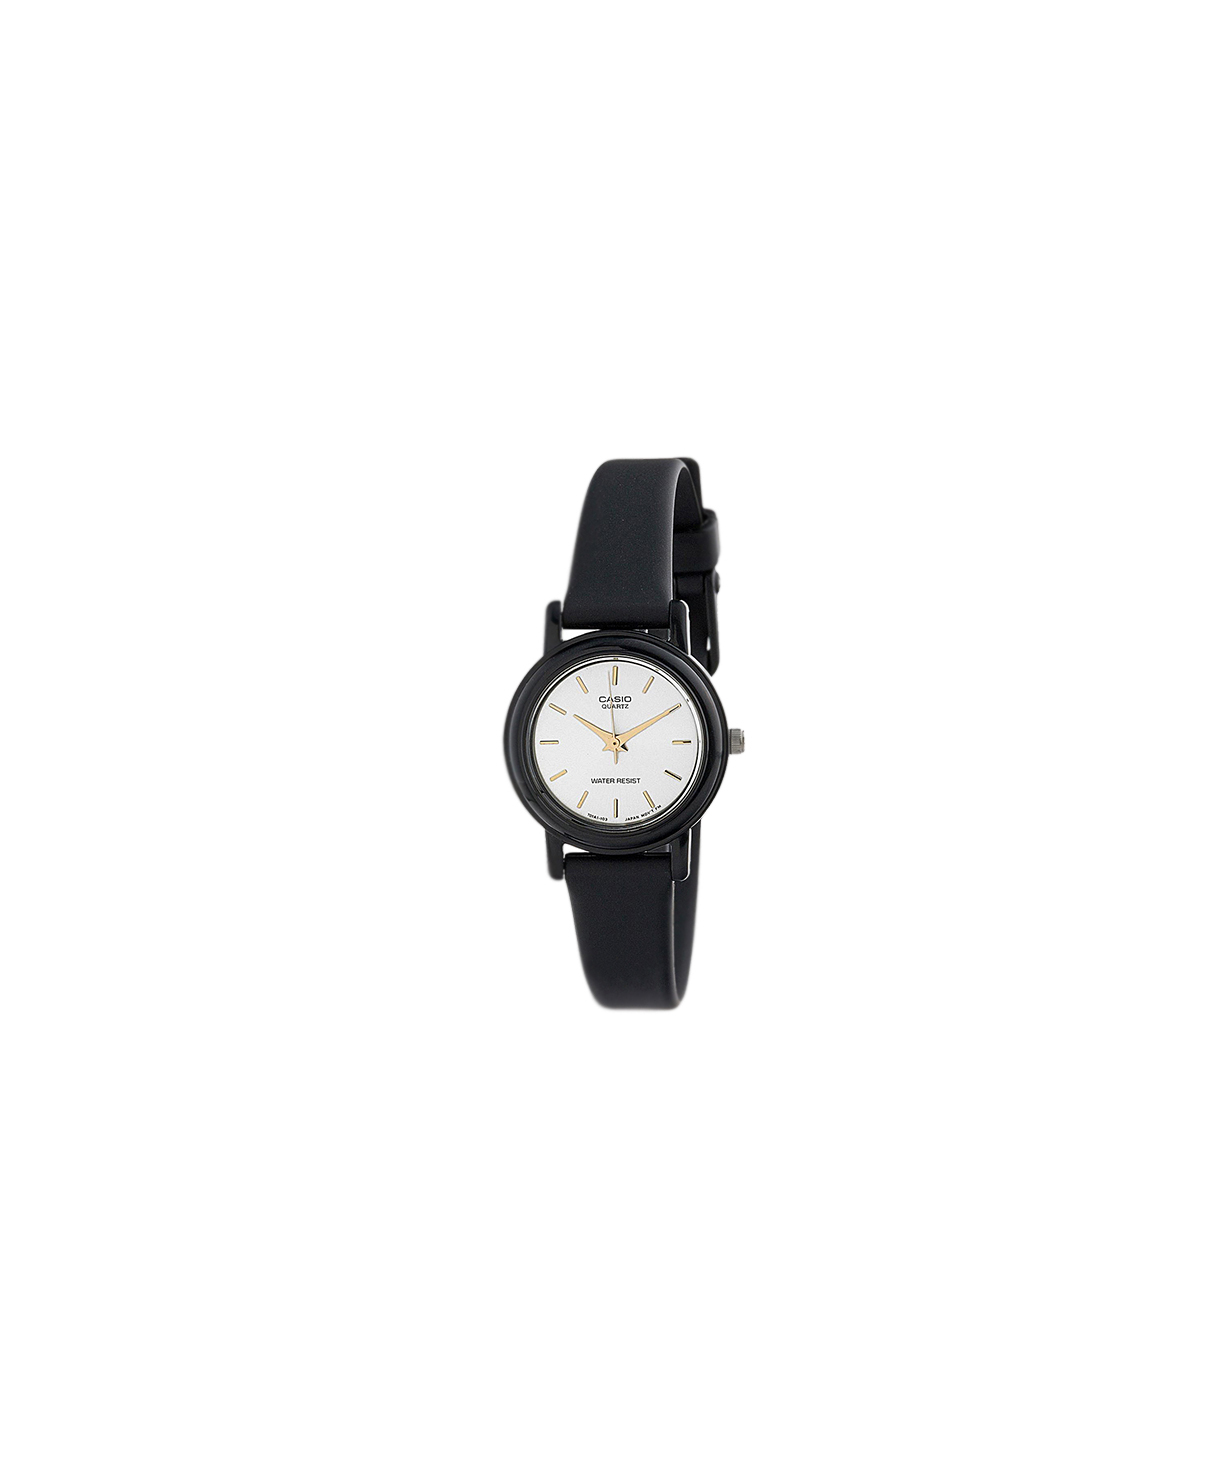 Ժամացույց  «Casio» ձեռքի  LQ-139EMV-7ALDF